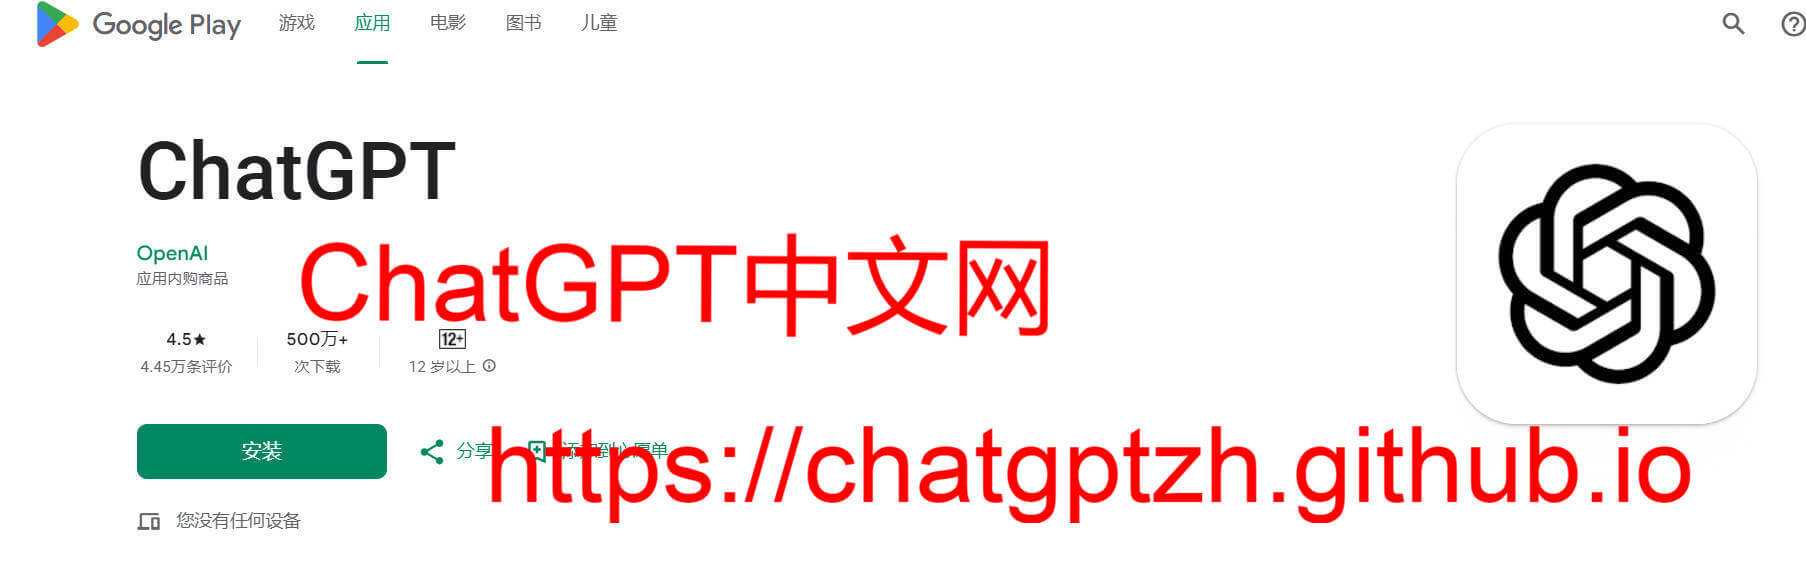 ChatGPT Android安卓手机客户端